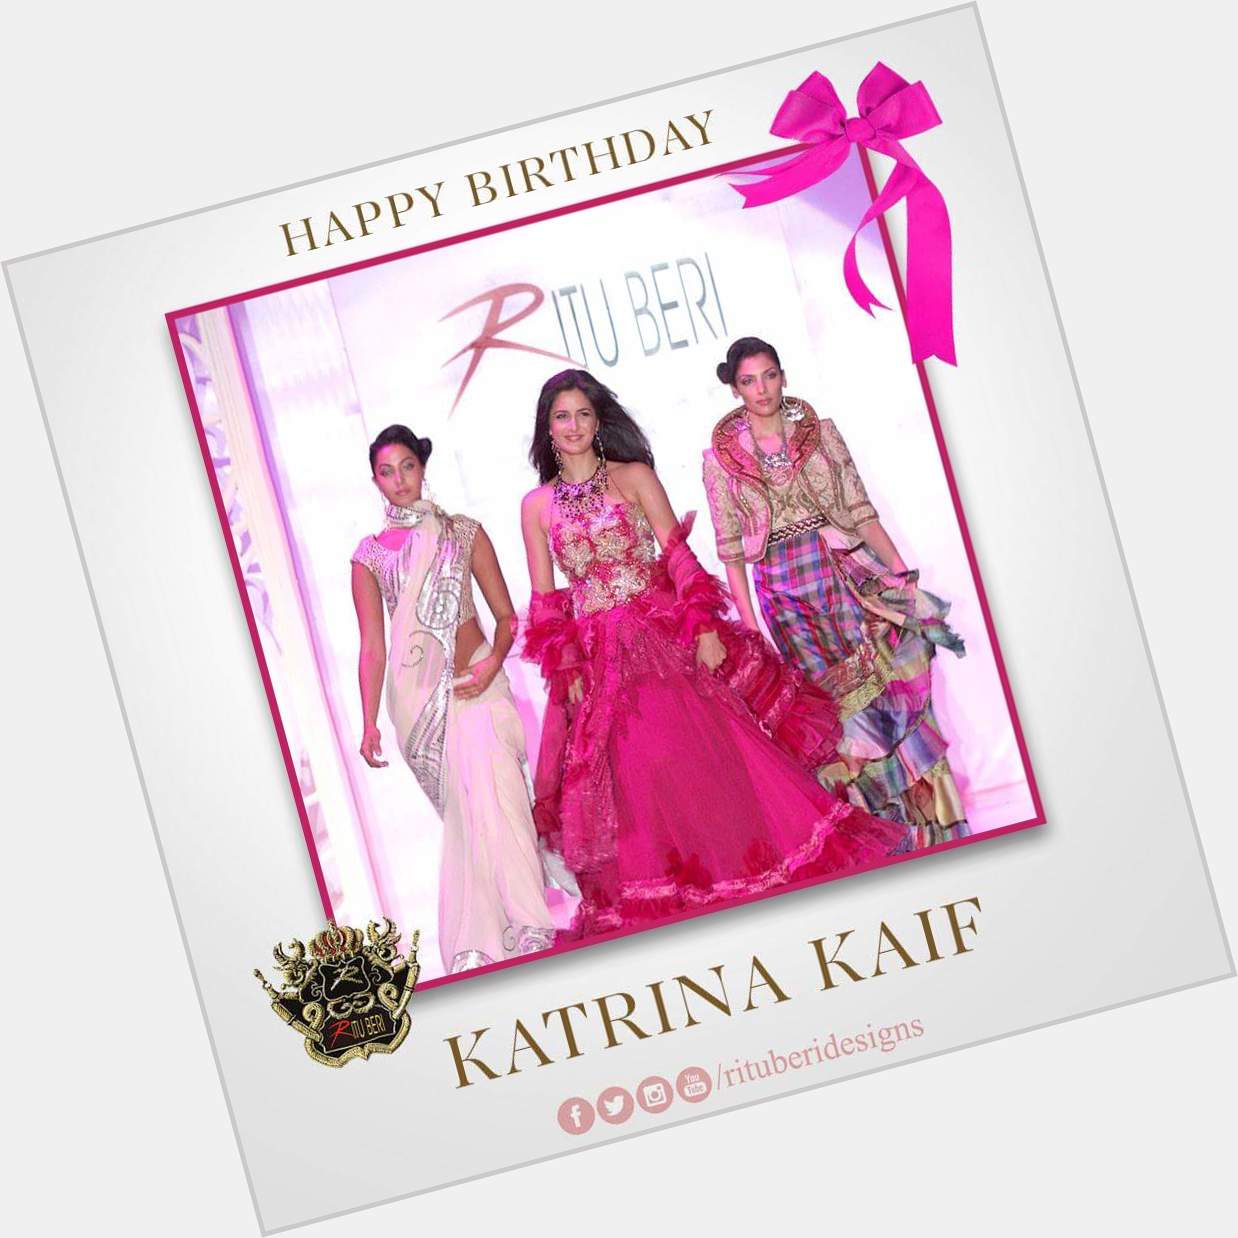 Ritu Beri Designs wishes beautiful Katrina Kaif a very Happy Birthday 